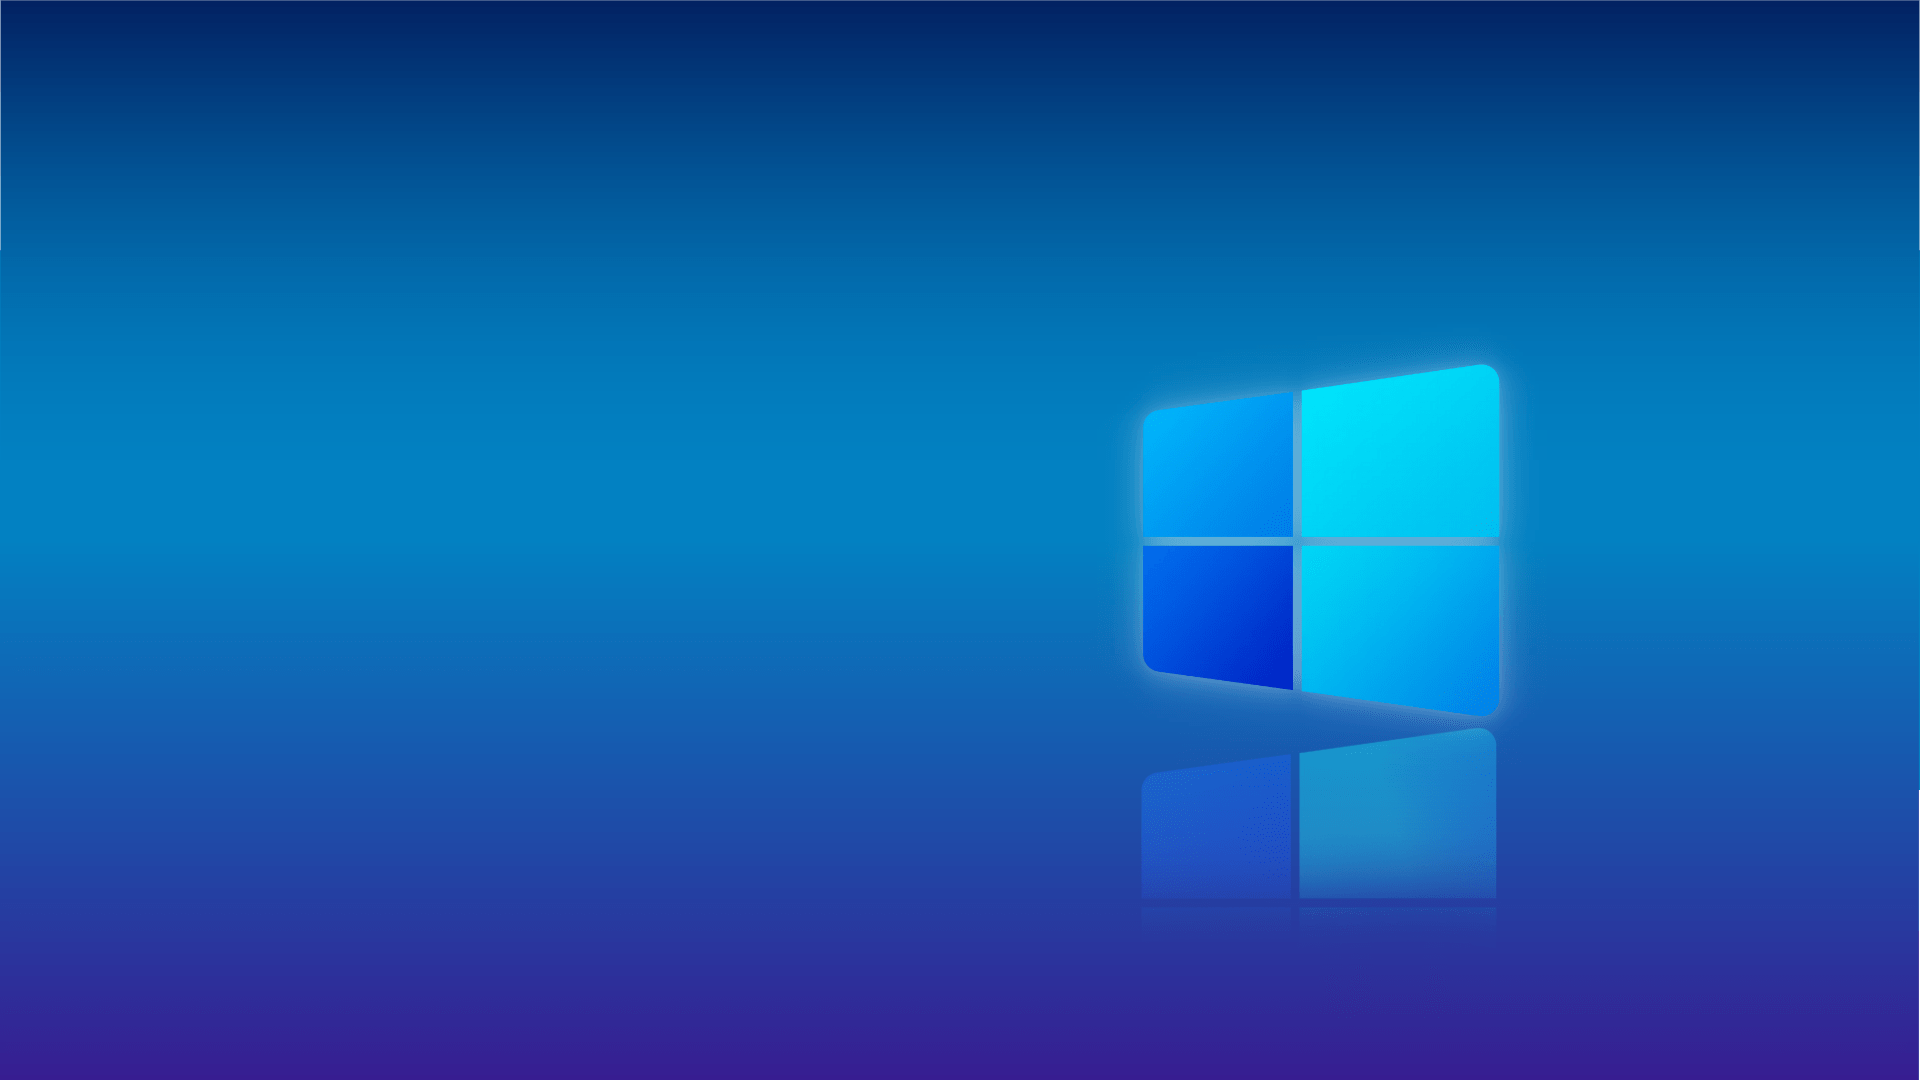 Windows 10 X Minimalist Wallpaper by D4rK7355608 on DeviantArt